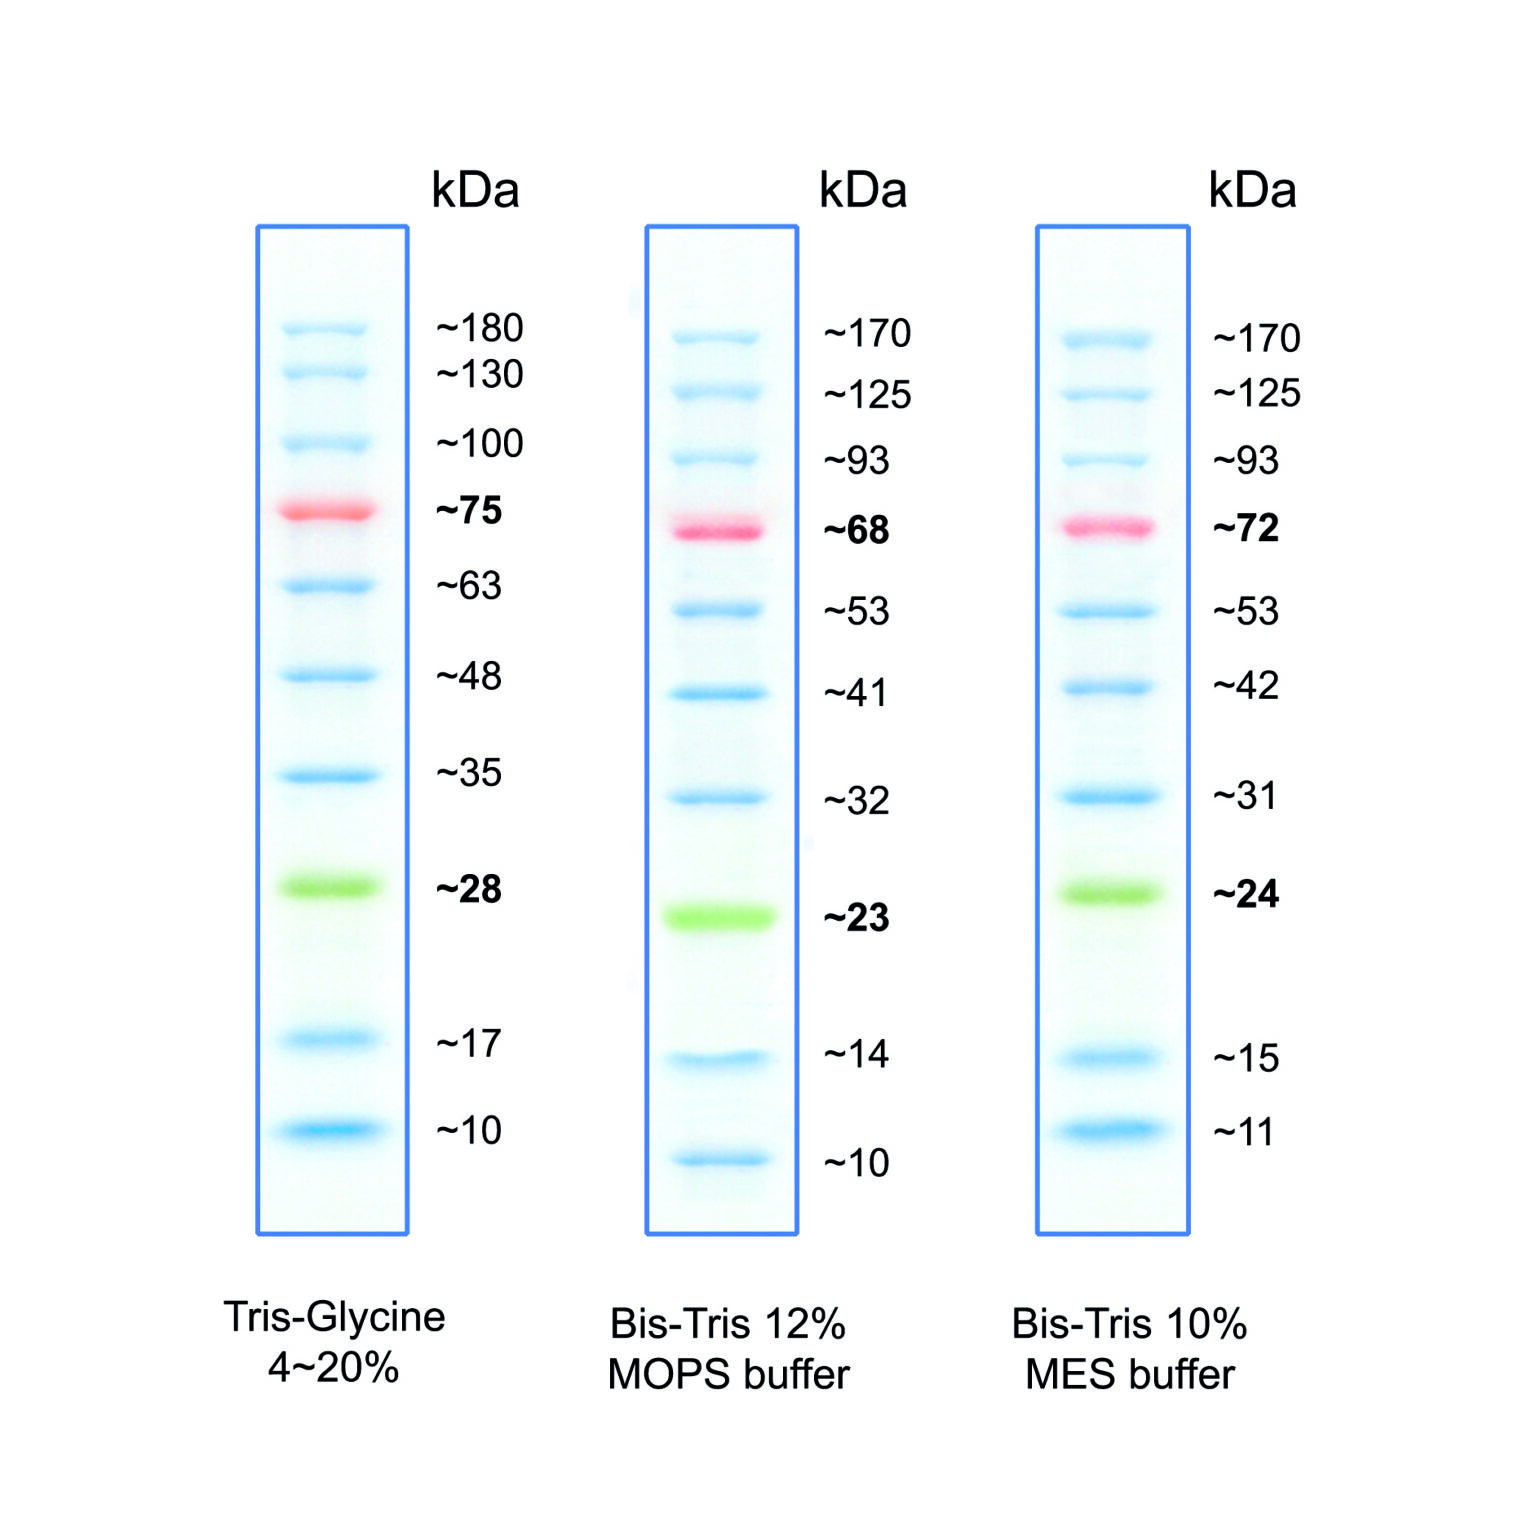 bluestar-prestained-protein-marker-nippon-genetics-europe